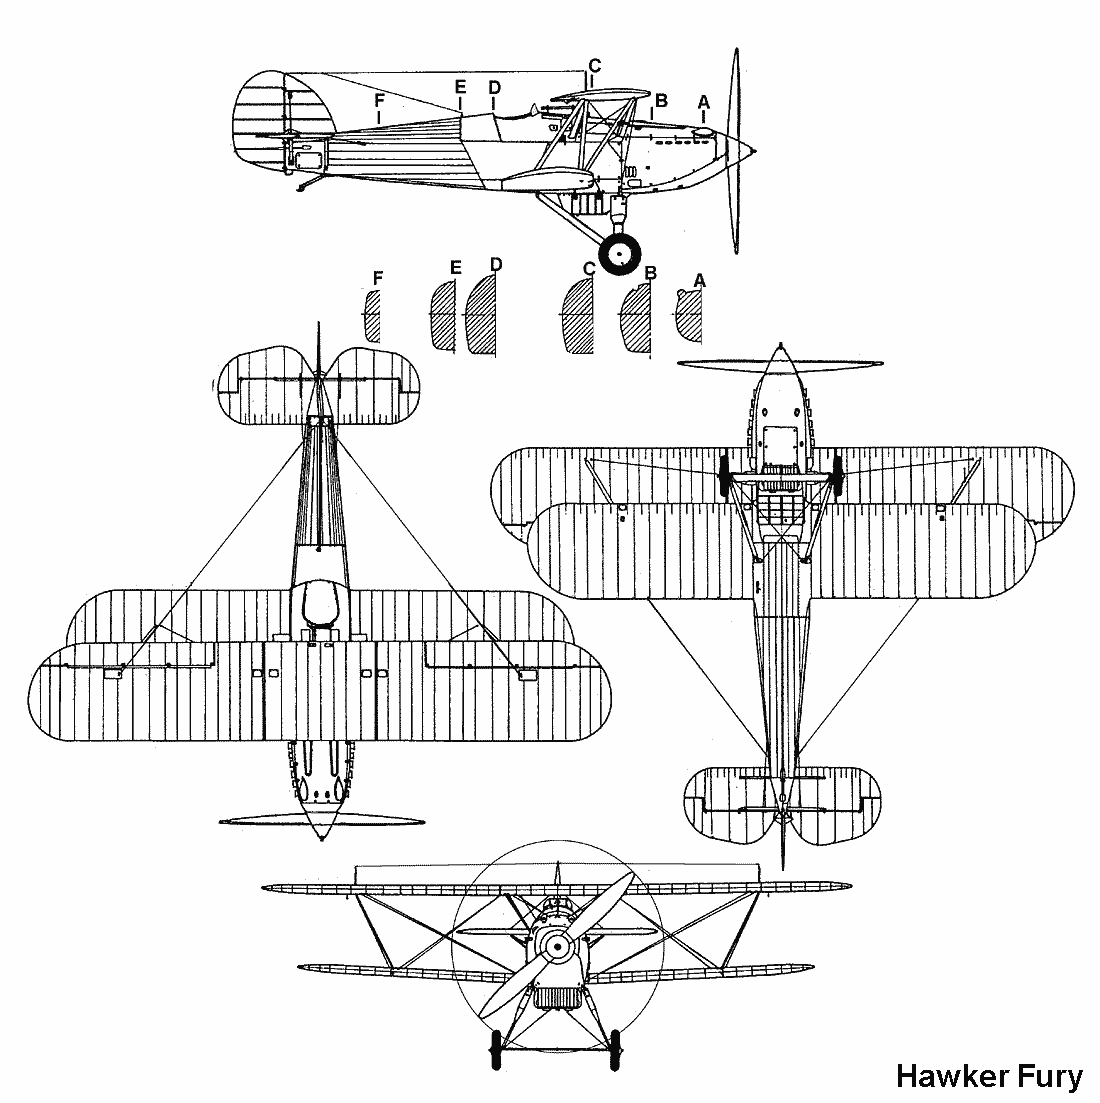 Hawker Fury blueprint